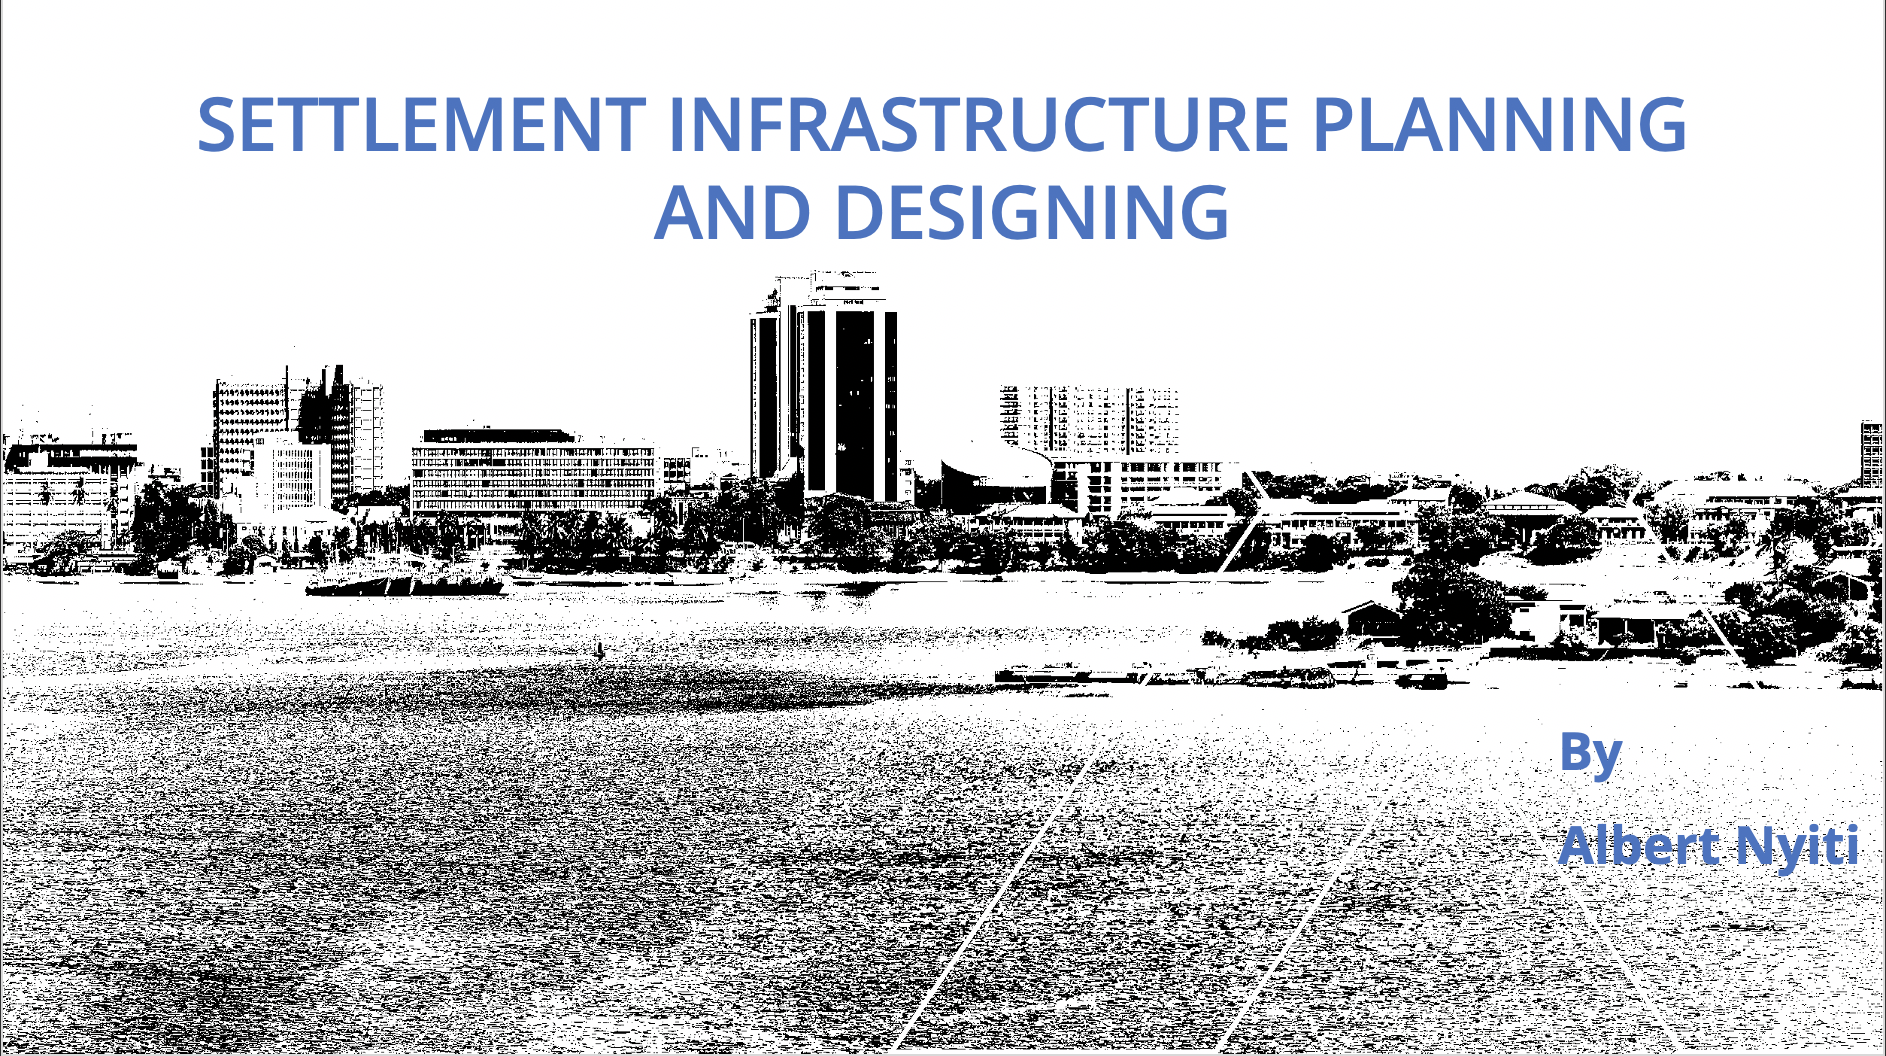 HI 312 Settlement Infstructure Planning and Designing Studio